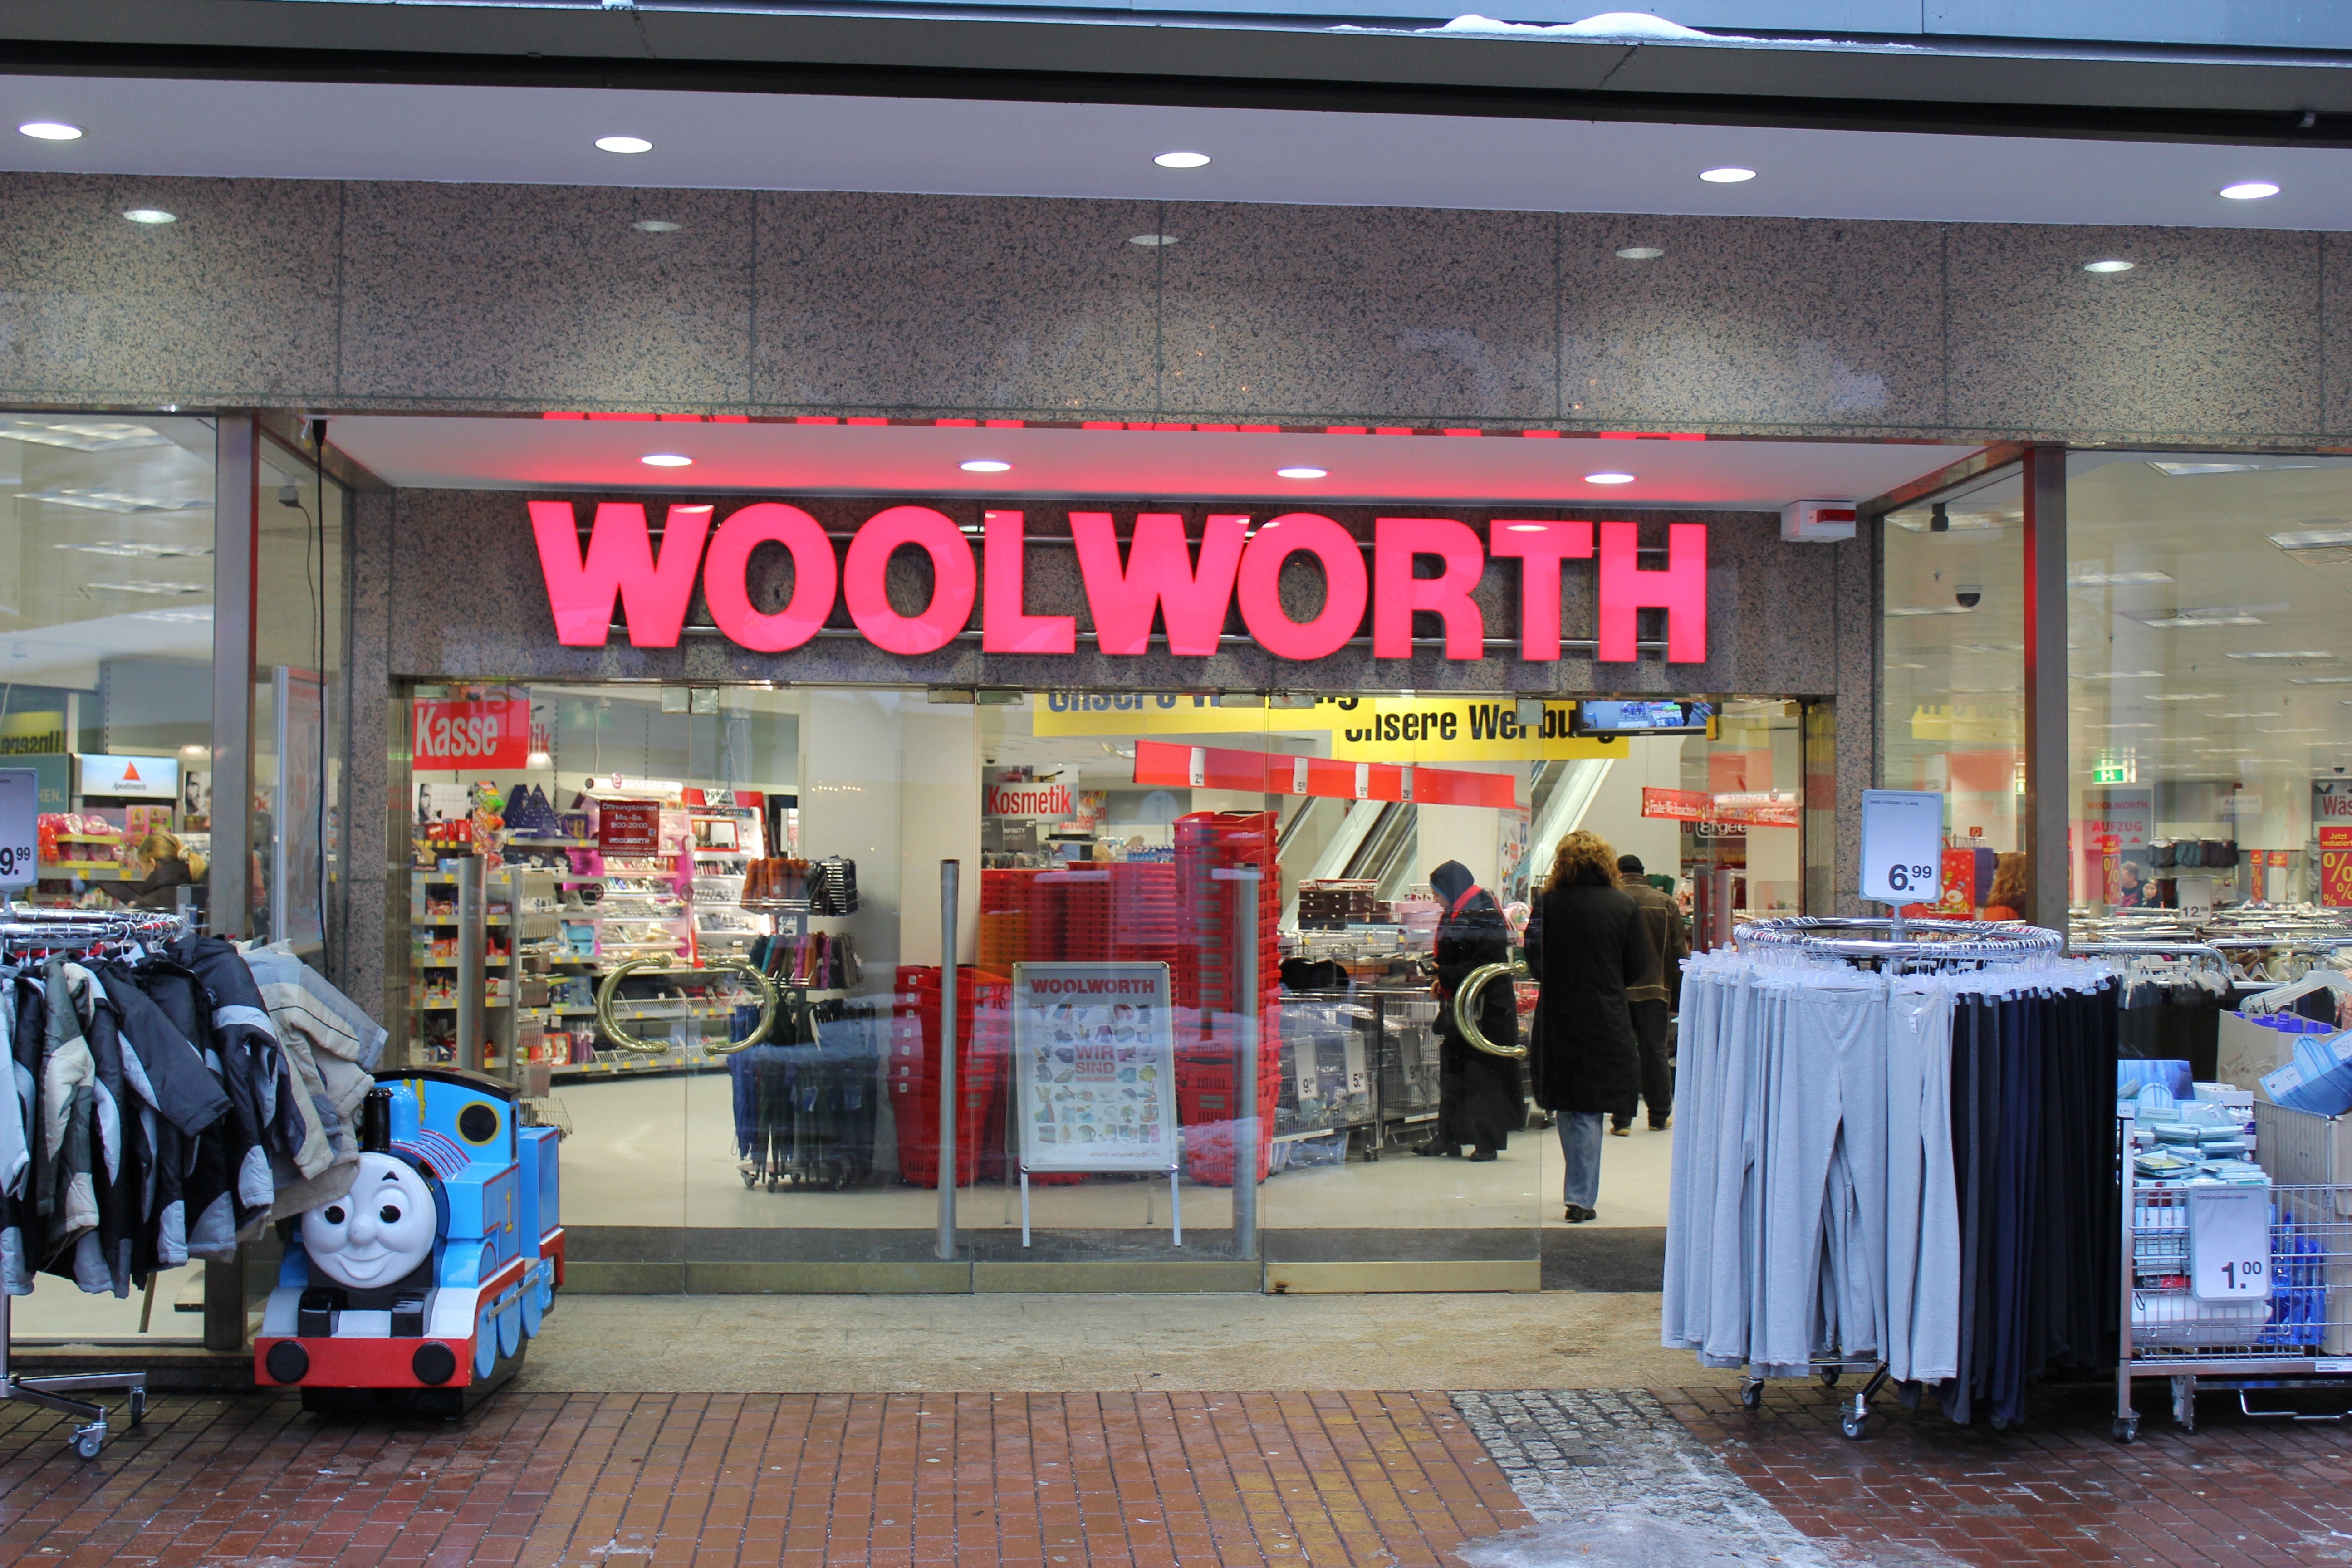 Woolworth, Westring 2 in Hamm